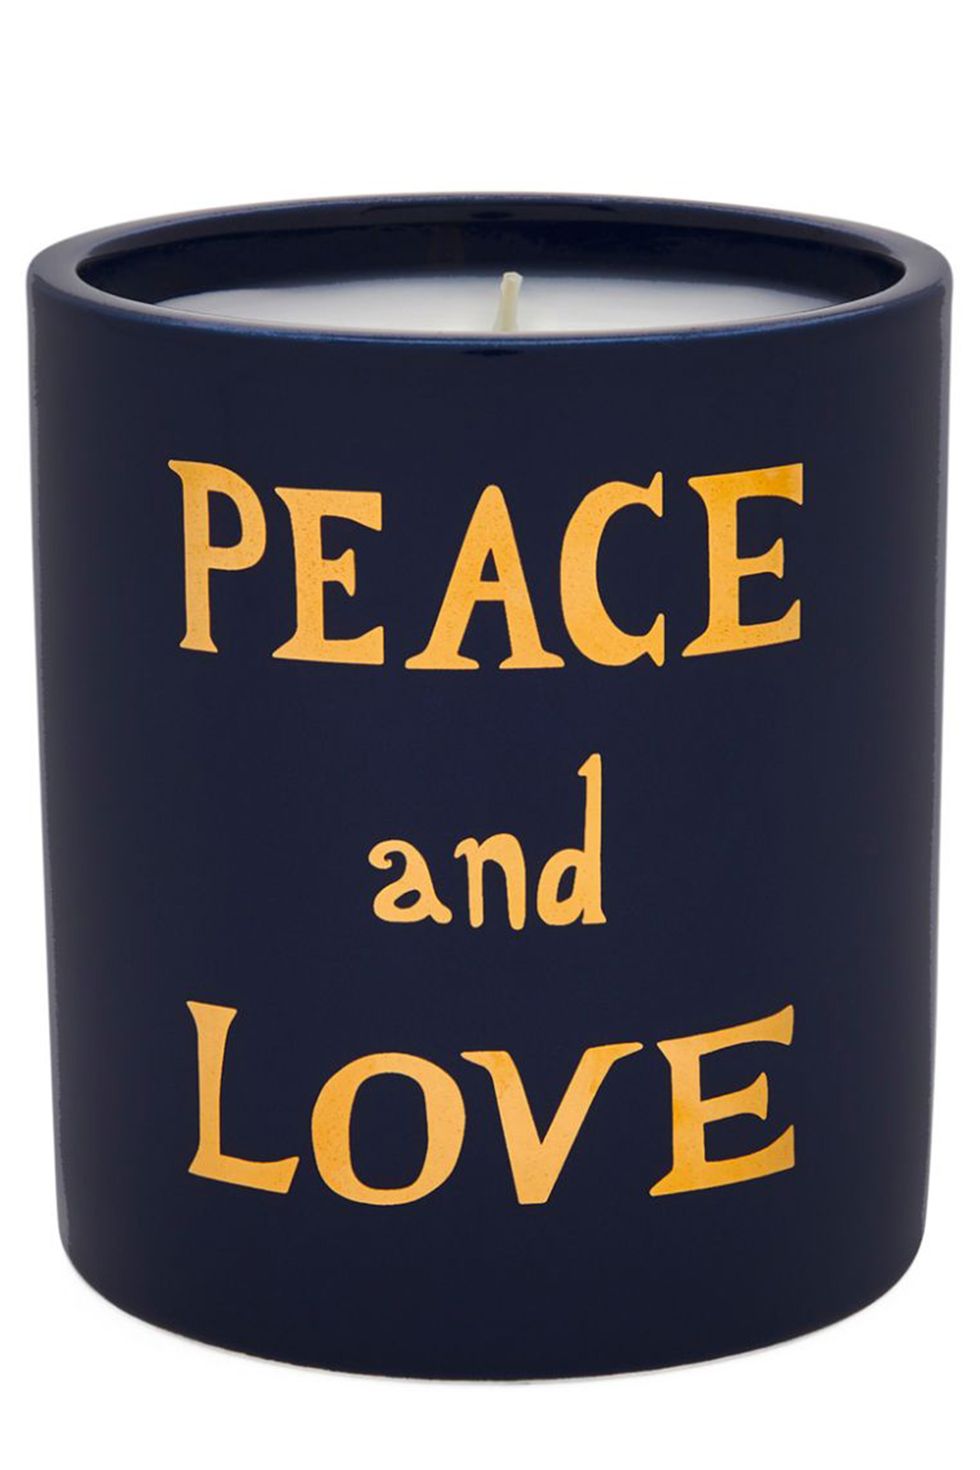 bella freud peace candle